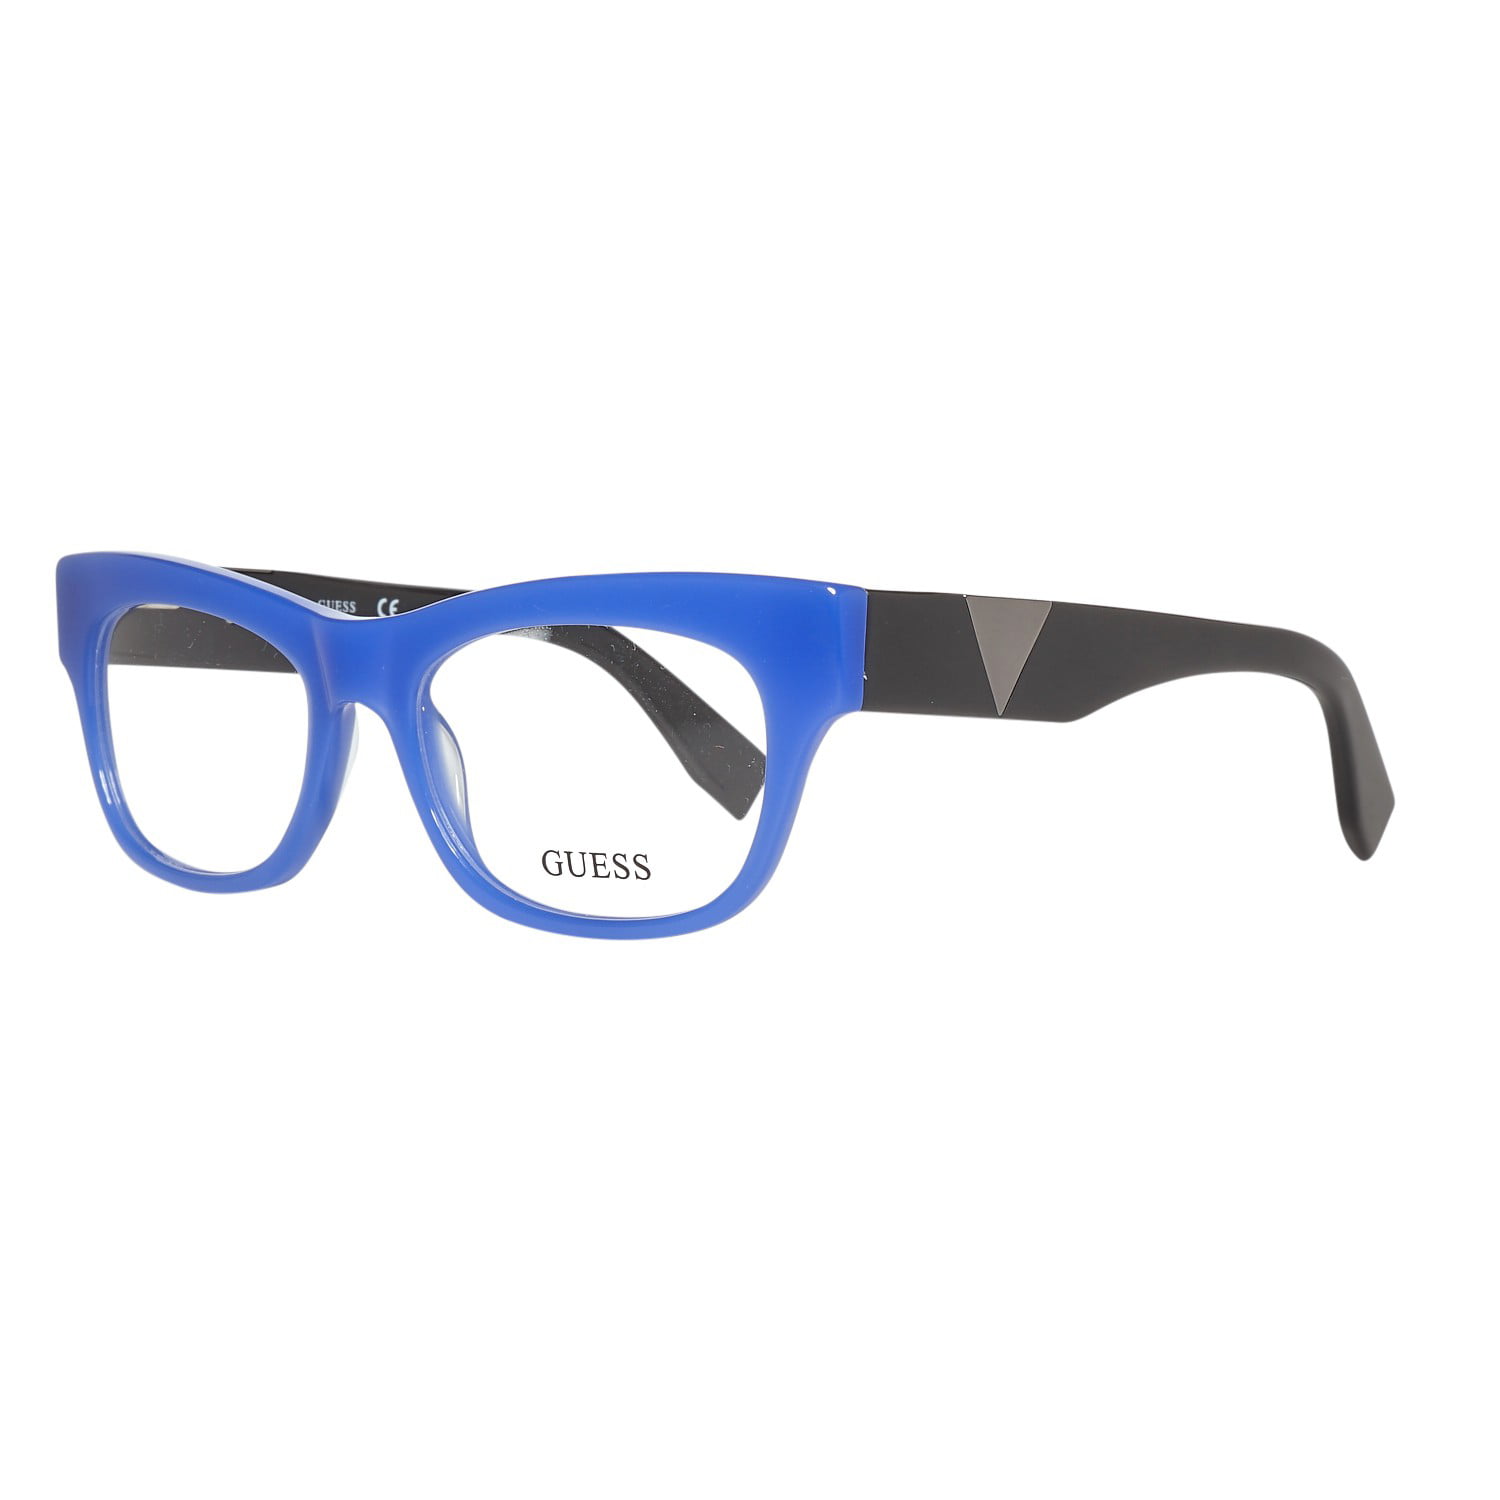 Eyeglasses Frame Guess Blue Women Gu2575 090 51